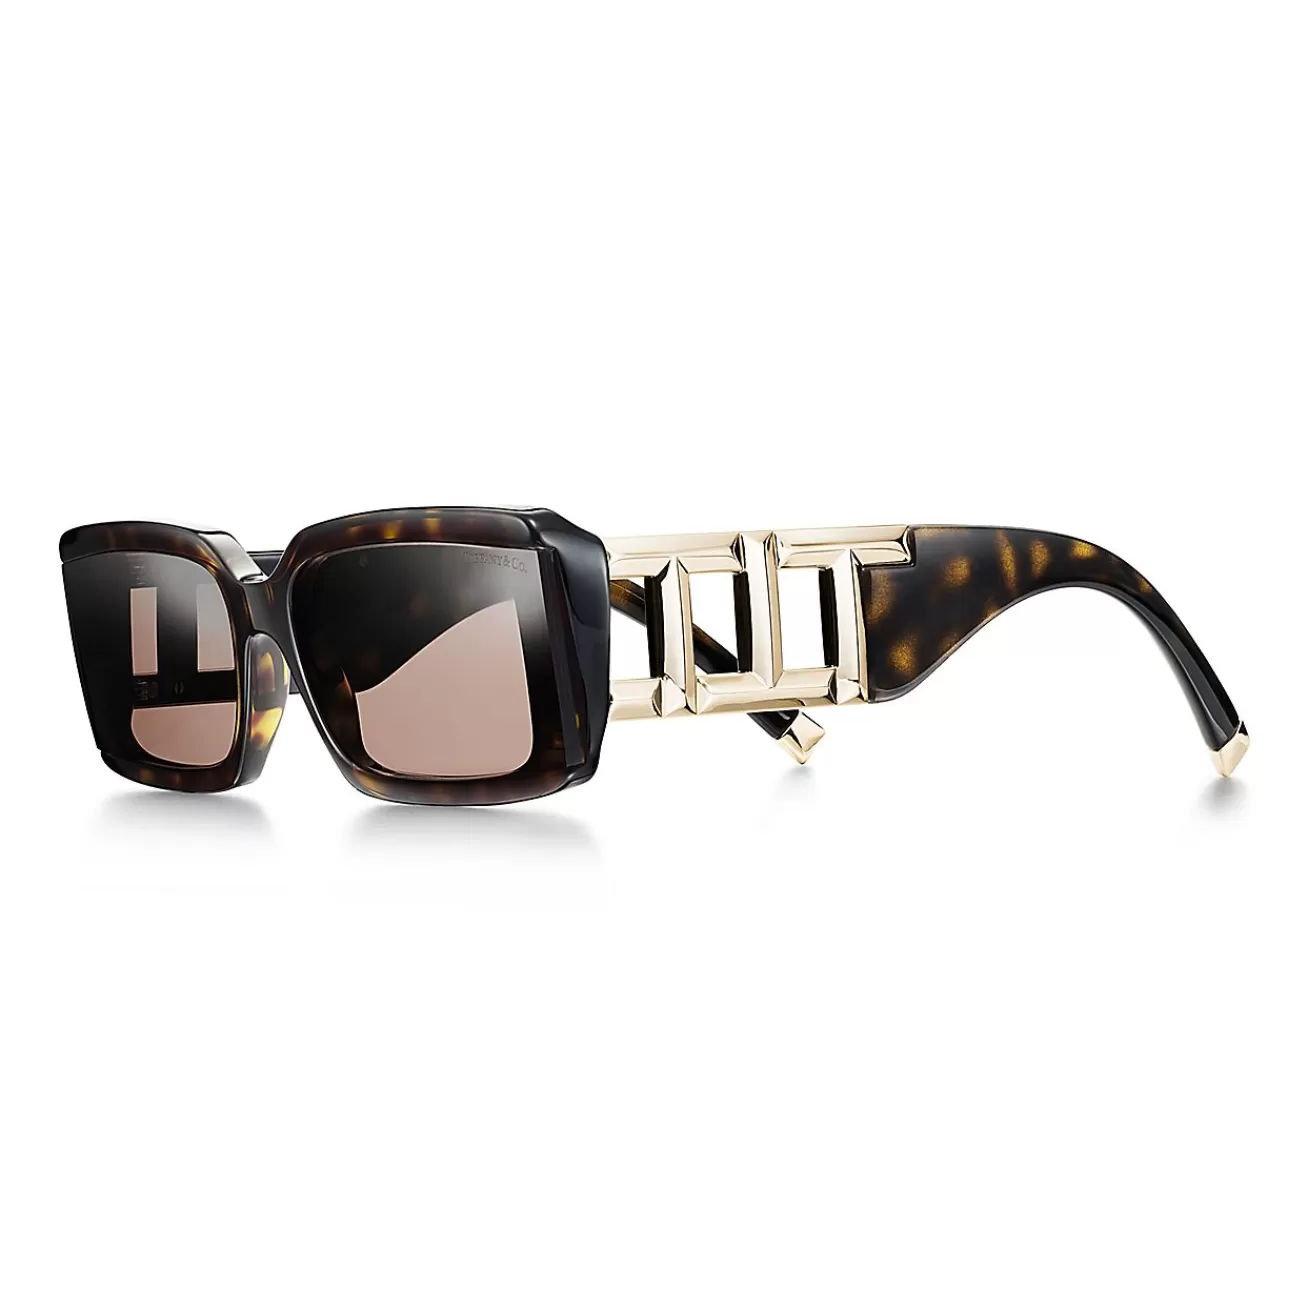 Tiffany & Co. Tiffany T Sunglasses in Tortoise Acetate, Pale Gold-colored Metal & Brown Lenses | ^Women Tiffany T | Sunglasses